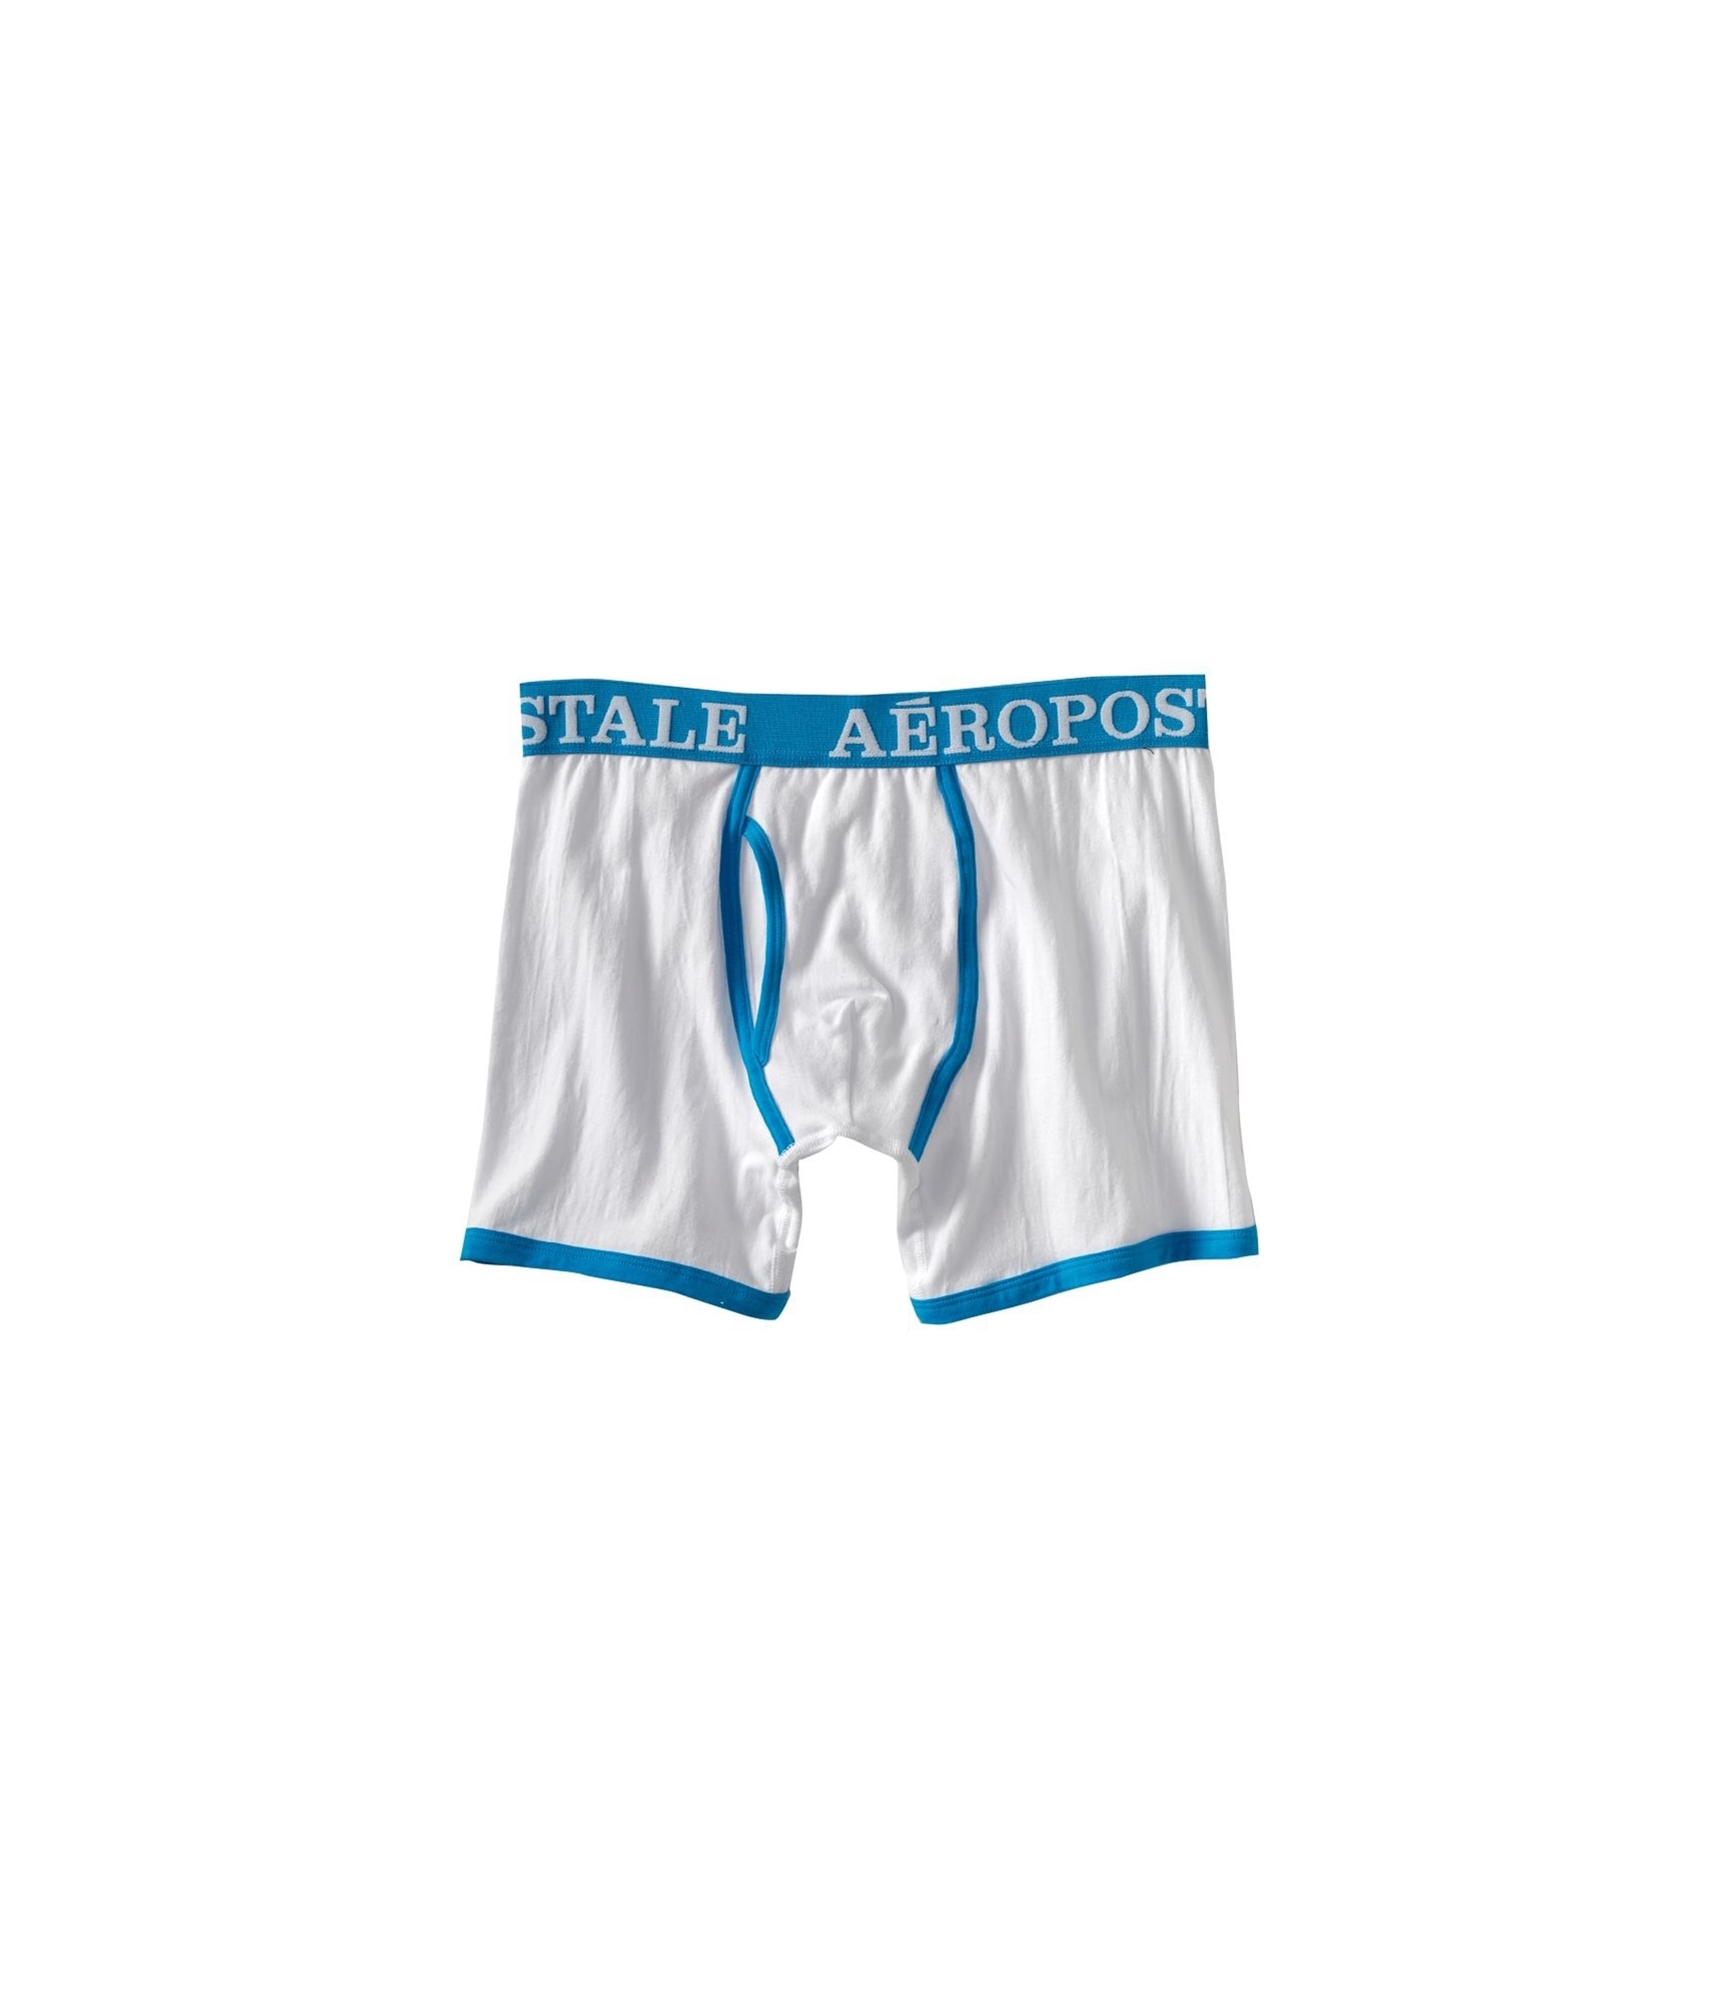 American Eagle Mens Ae Logo 1-Pack Underwear Boxer Briefs